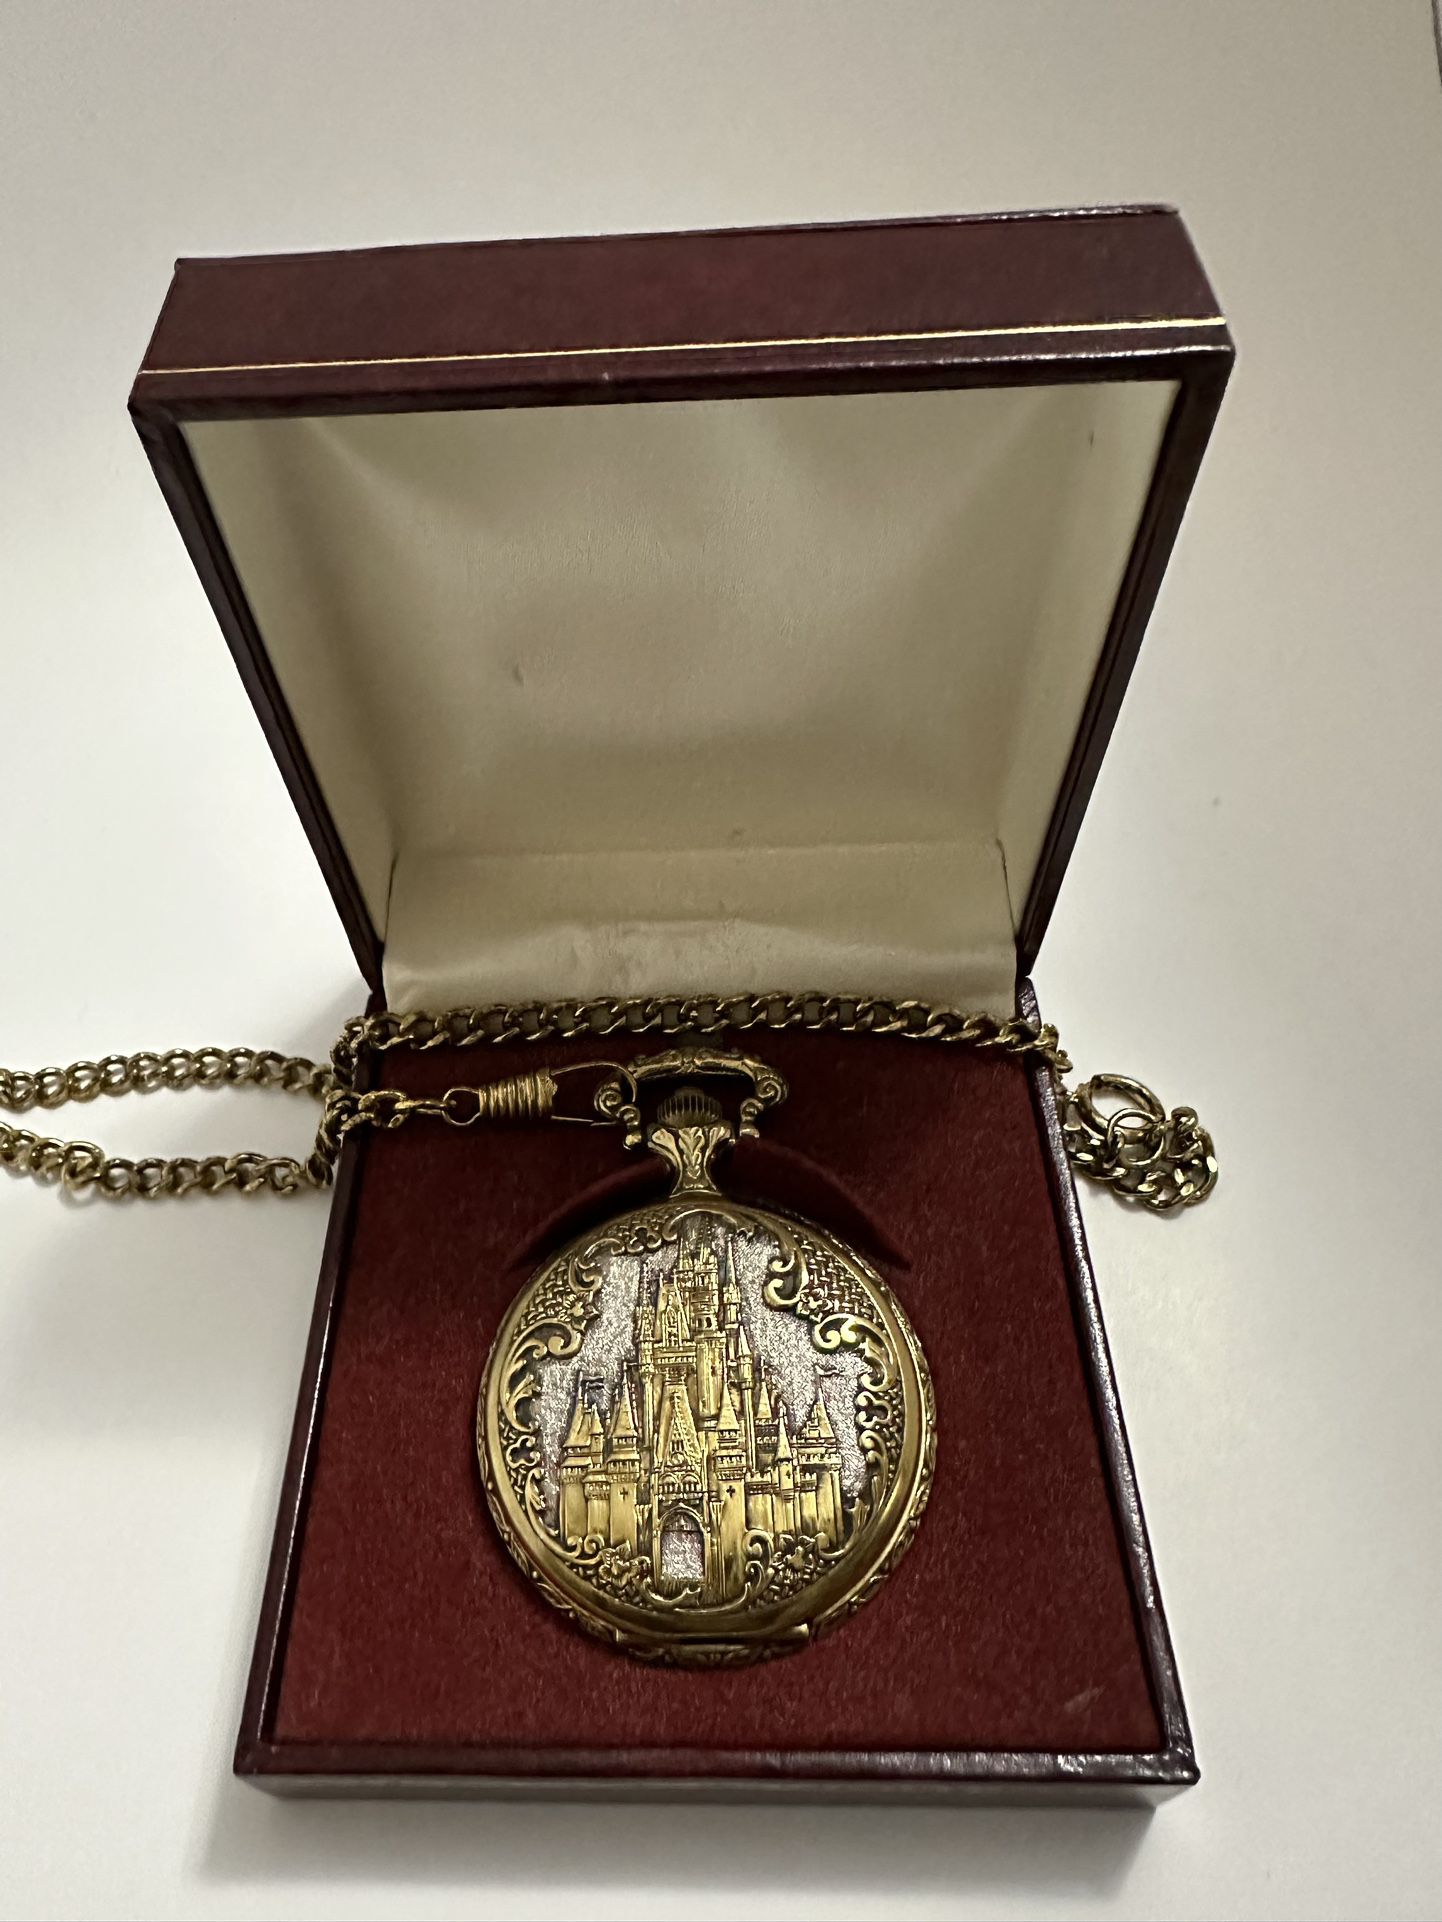 Disney Limited Edition Commemorating 25th Anniversary Of Walt Disney World Pocket Watch